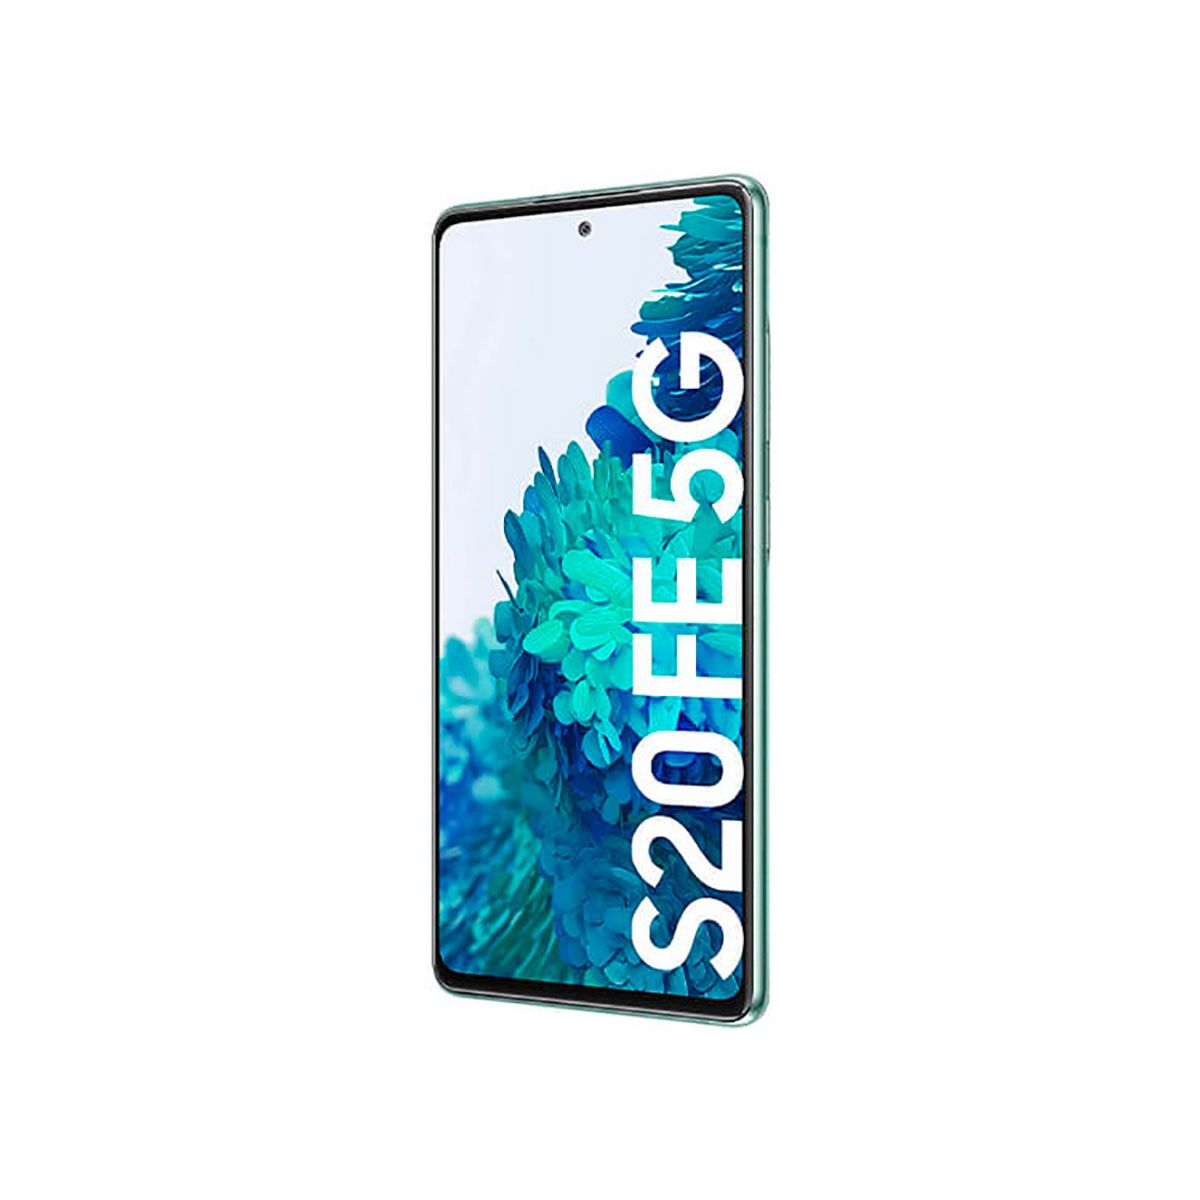 Samsung Galaxy S20 FE 5G 6GB/128GB Green (Cloud Mint) Dual SIM G781B